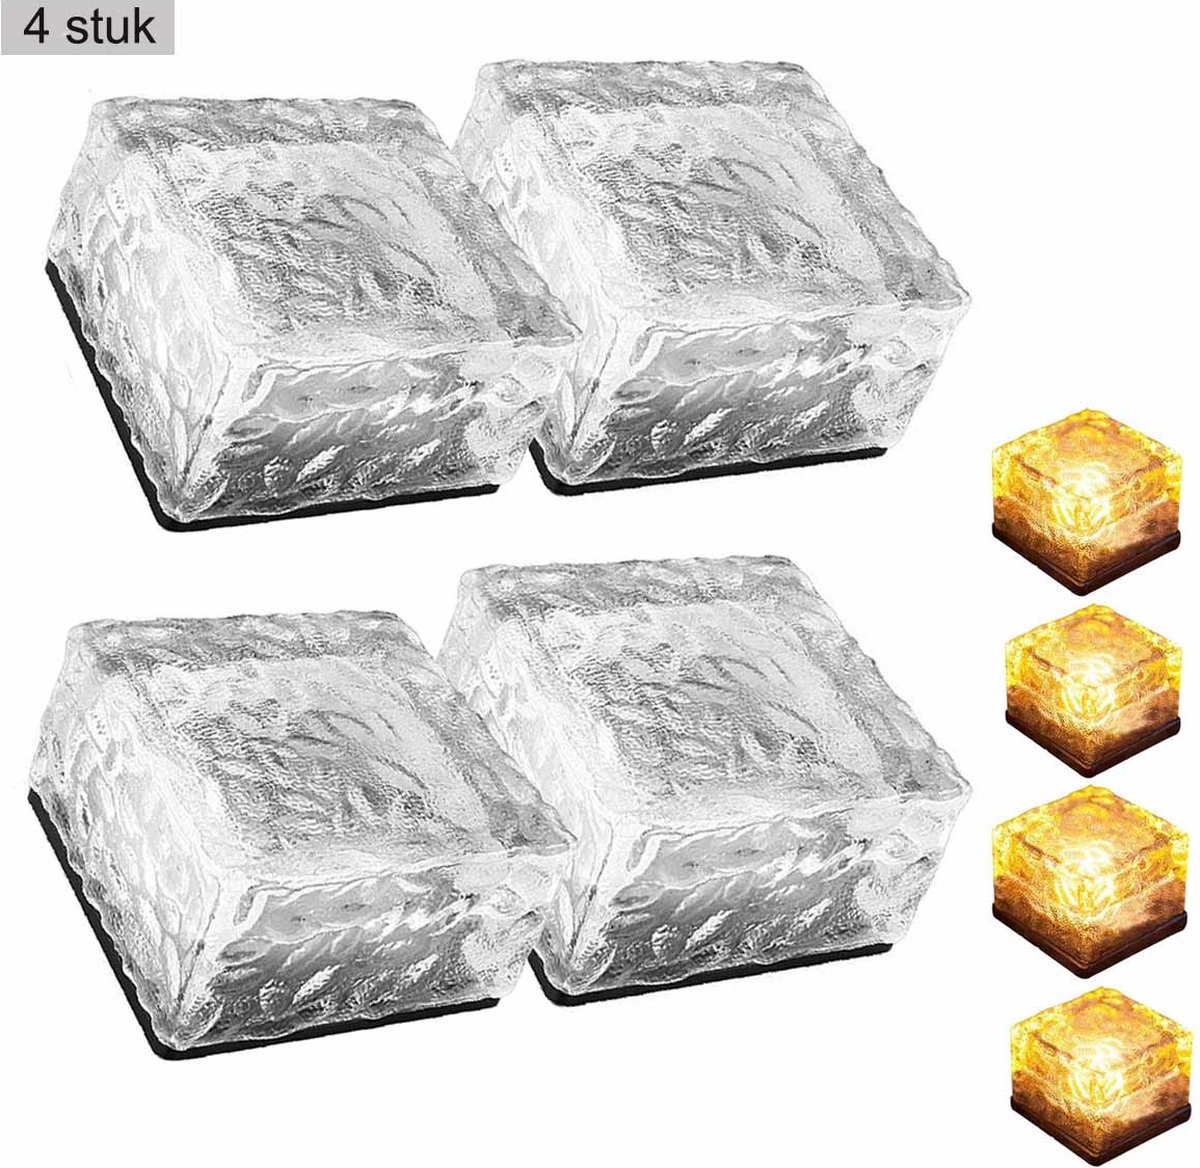 CNL Sight Grondspot(4 stuk Maat L ) - Solar Ice Cube LED- 10cm*10cm*5.5cm-Licht-solar Tuinverlichting op zonne-energie-warmlicht - Brick light - IP68